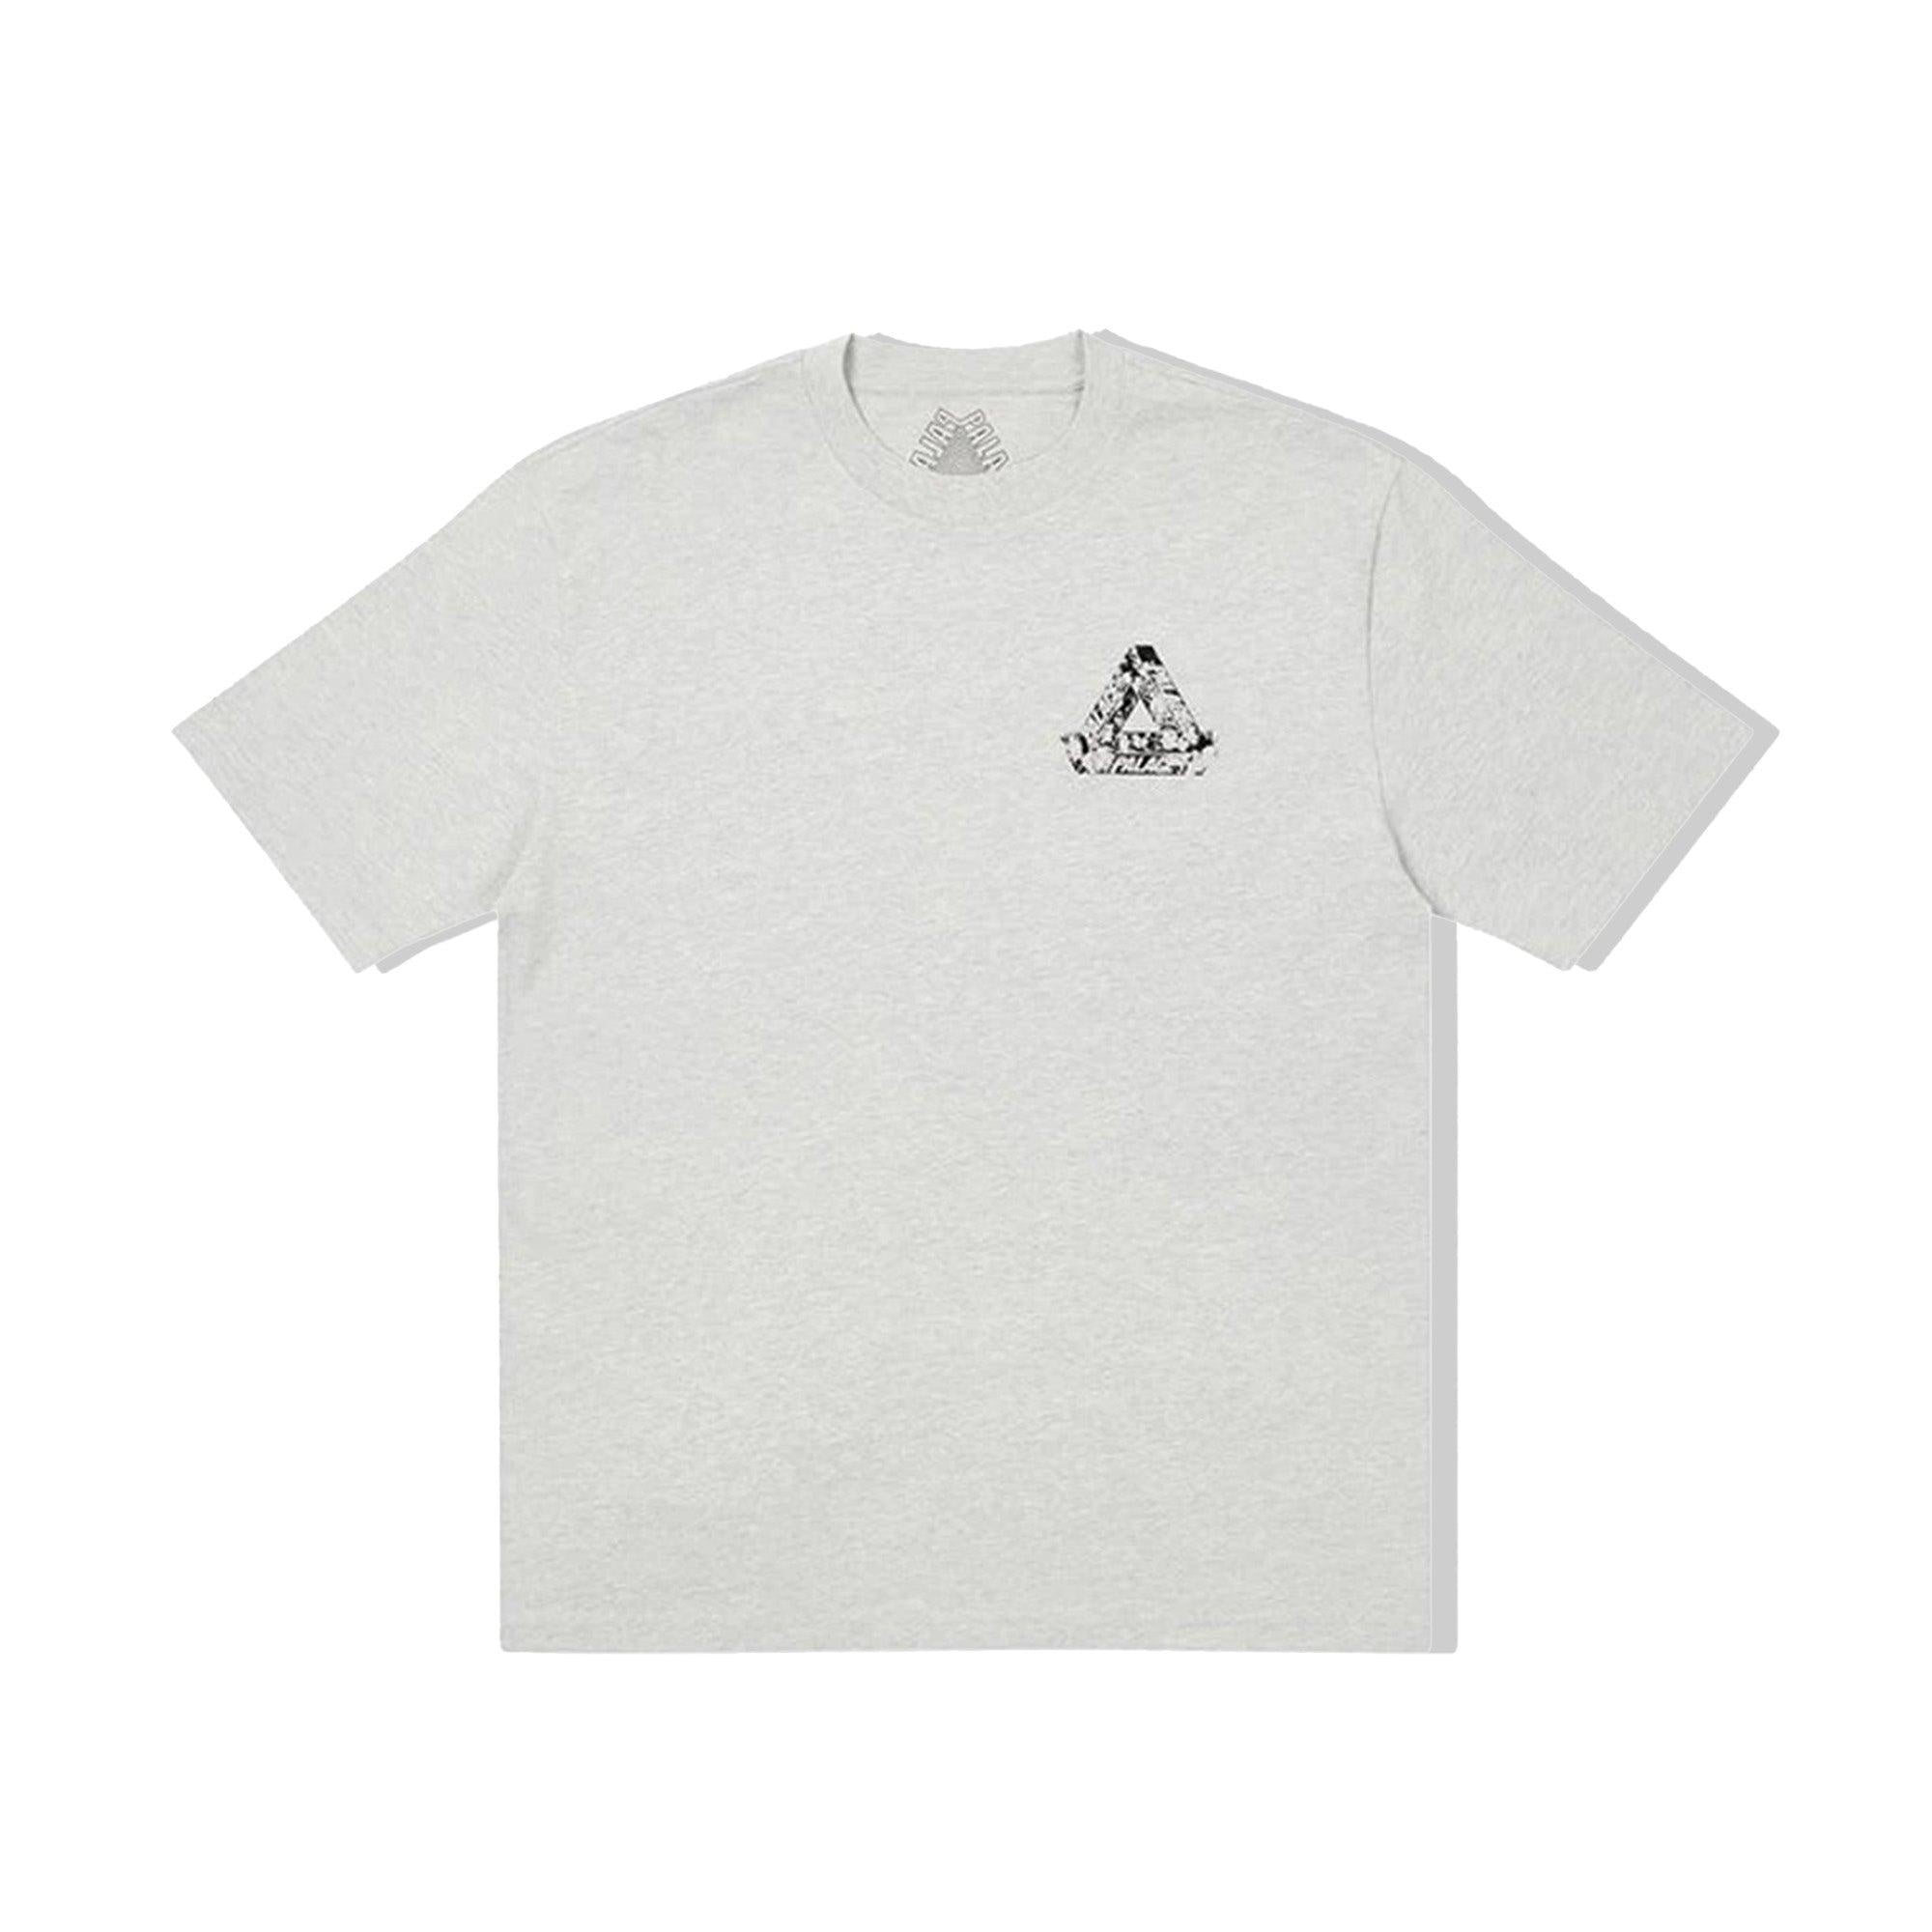 Buy Palace Palace Tri-Heads Grey Marl T-Shirt Online